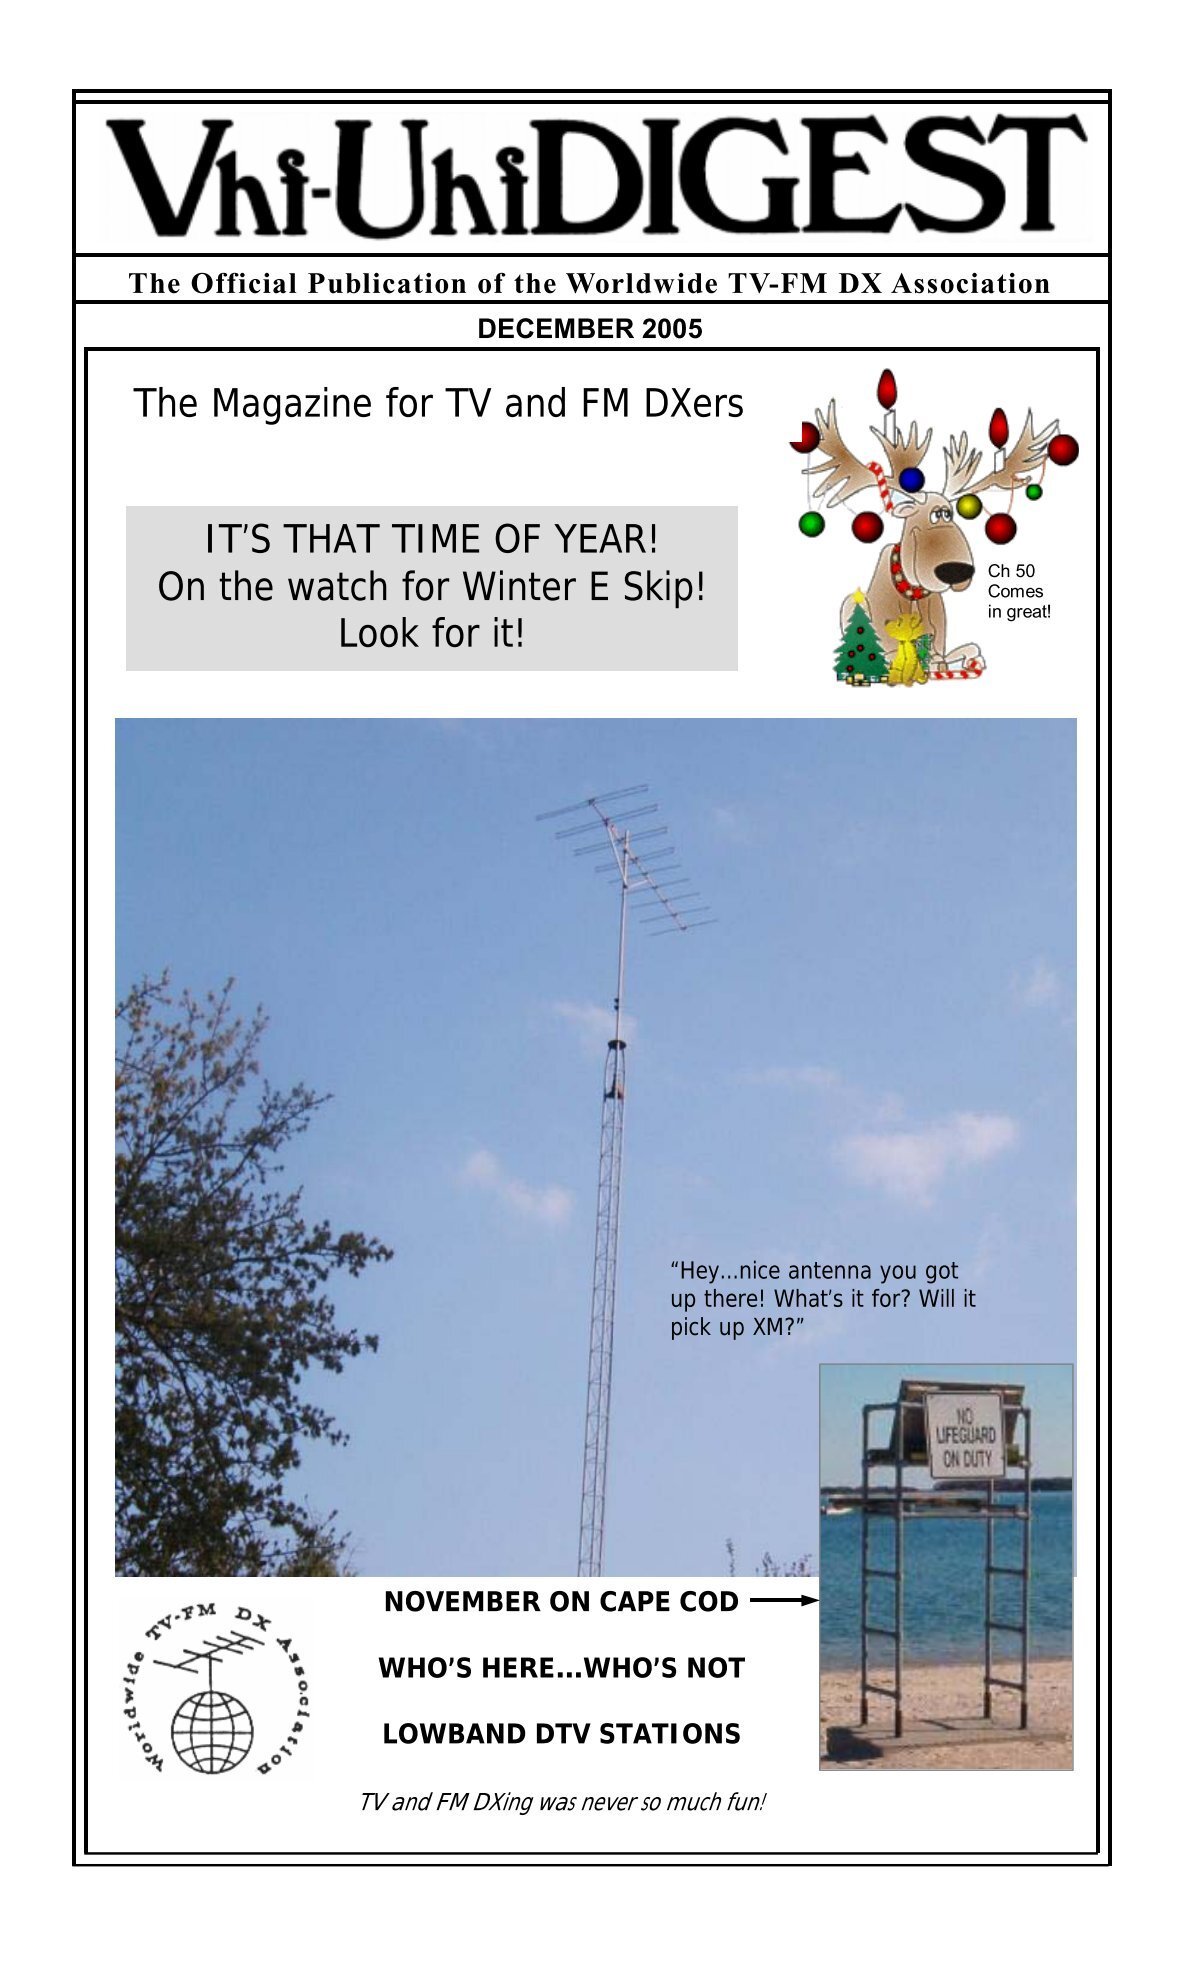 KTIM - FM 89.1 - Texas Rangers bring back the powder blue